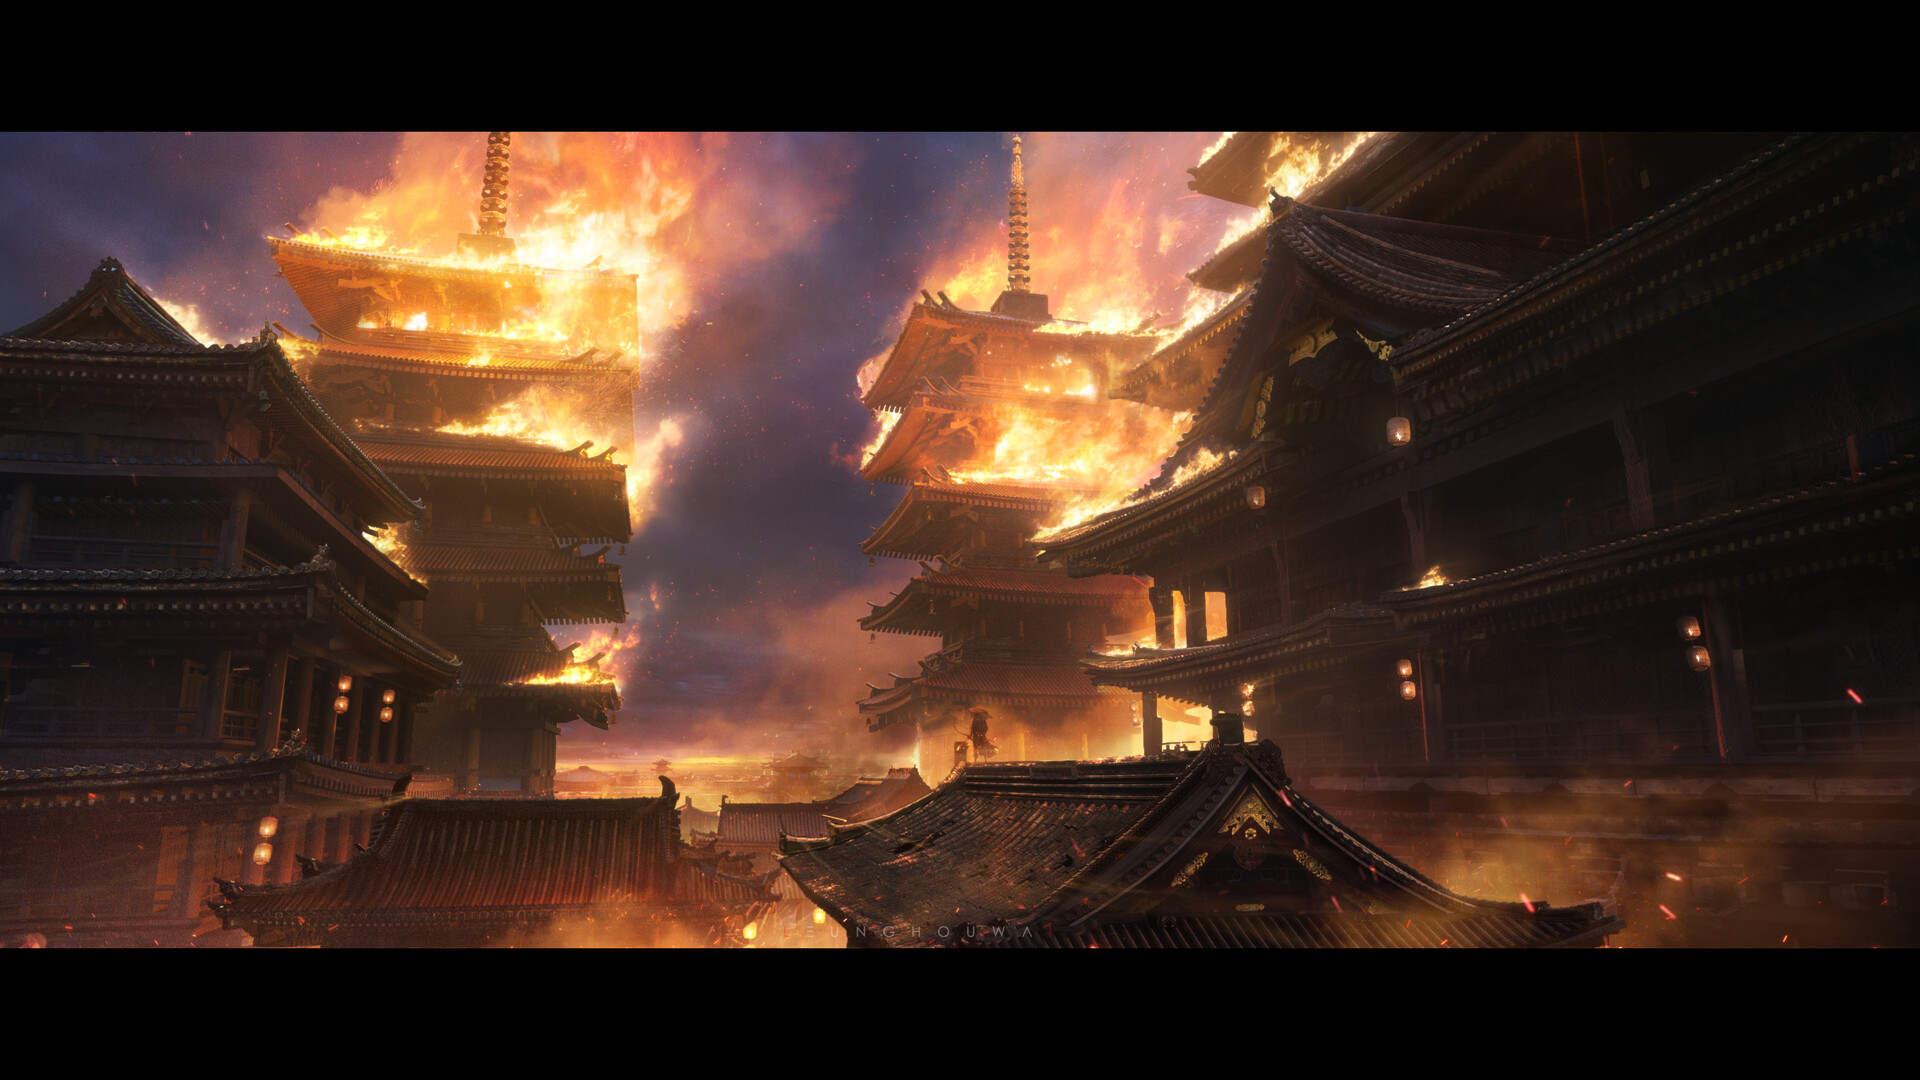 Burning ancient city